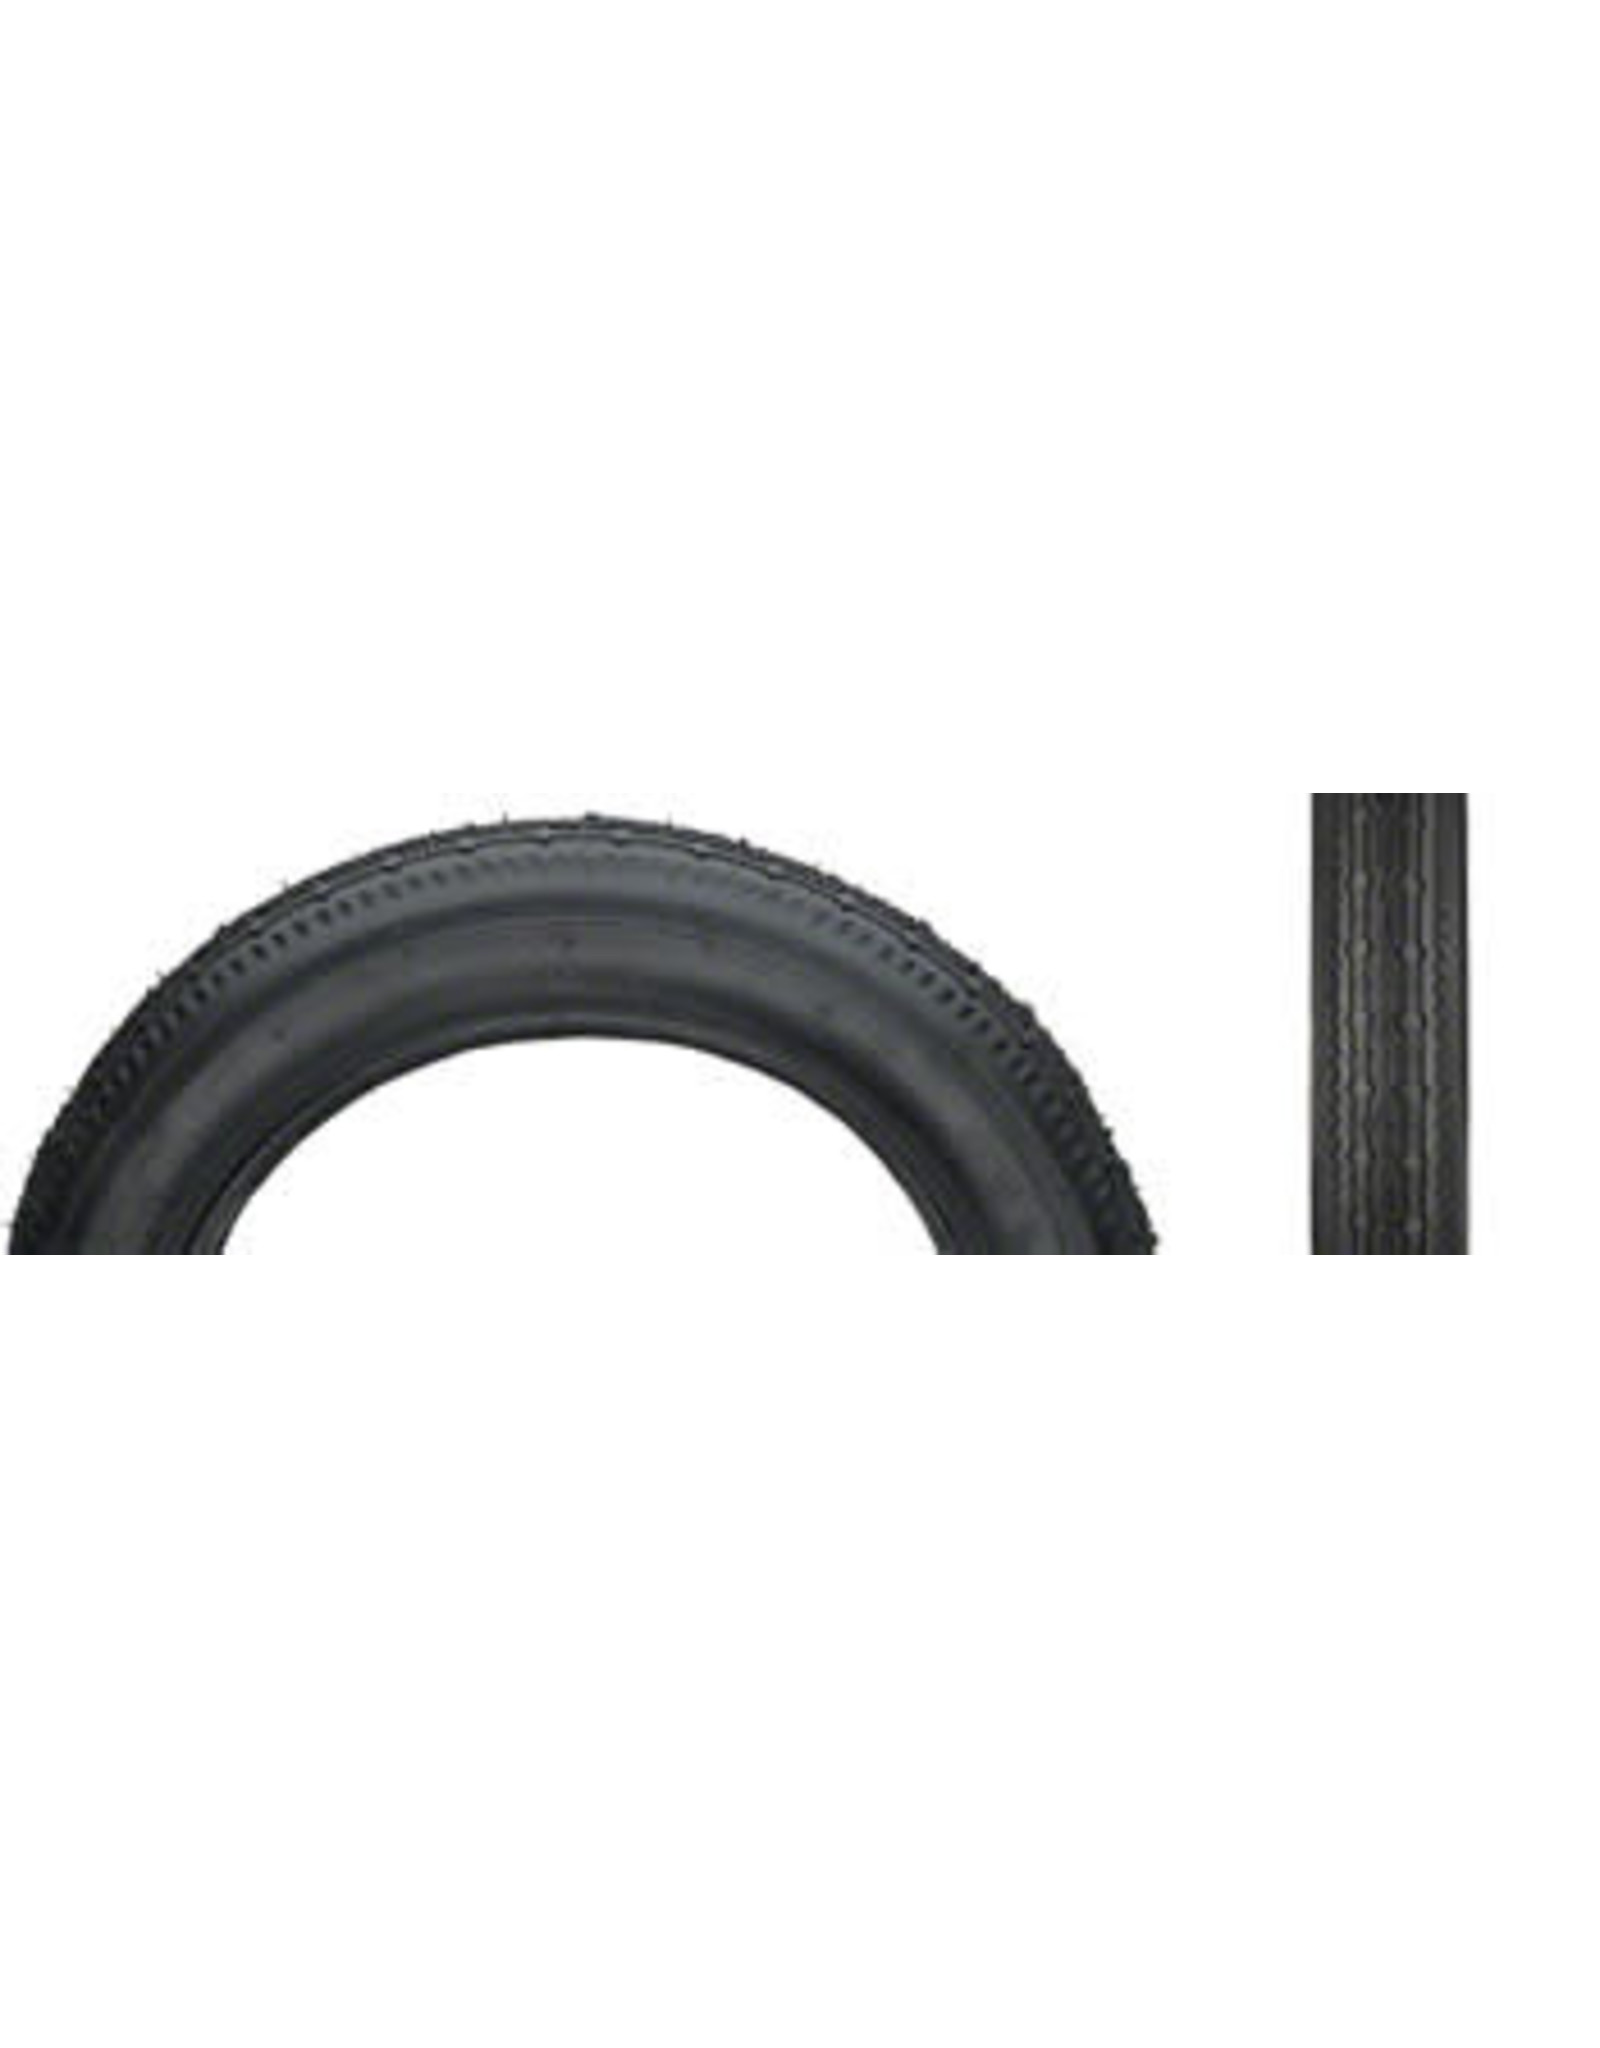 Kenda Kenda K124 Street Tire - 12.5 x 2.25", Clincher, Wire, Black, 22tpi